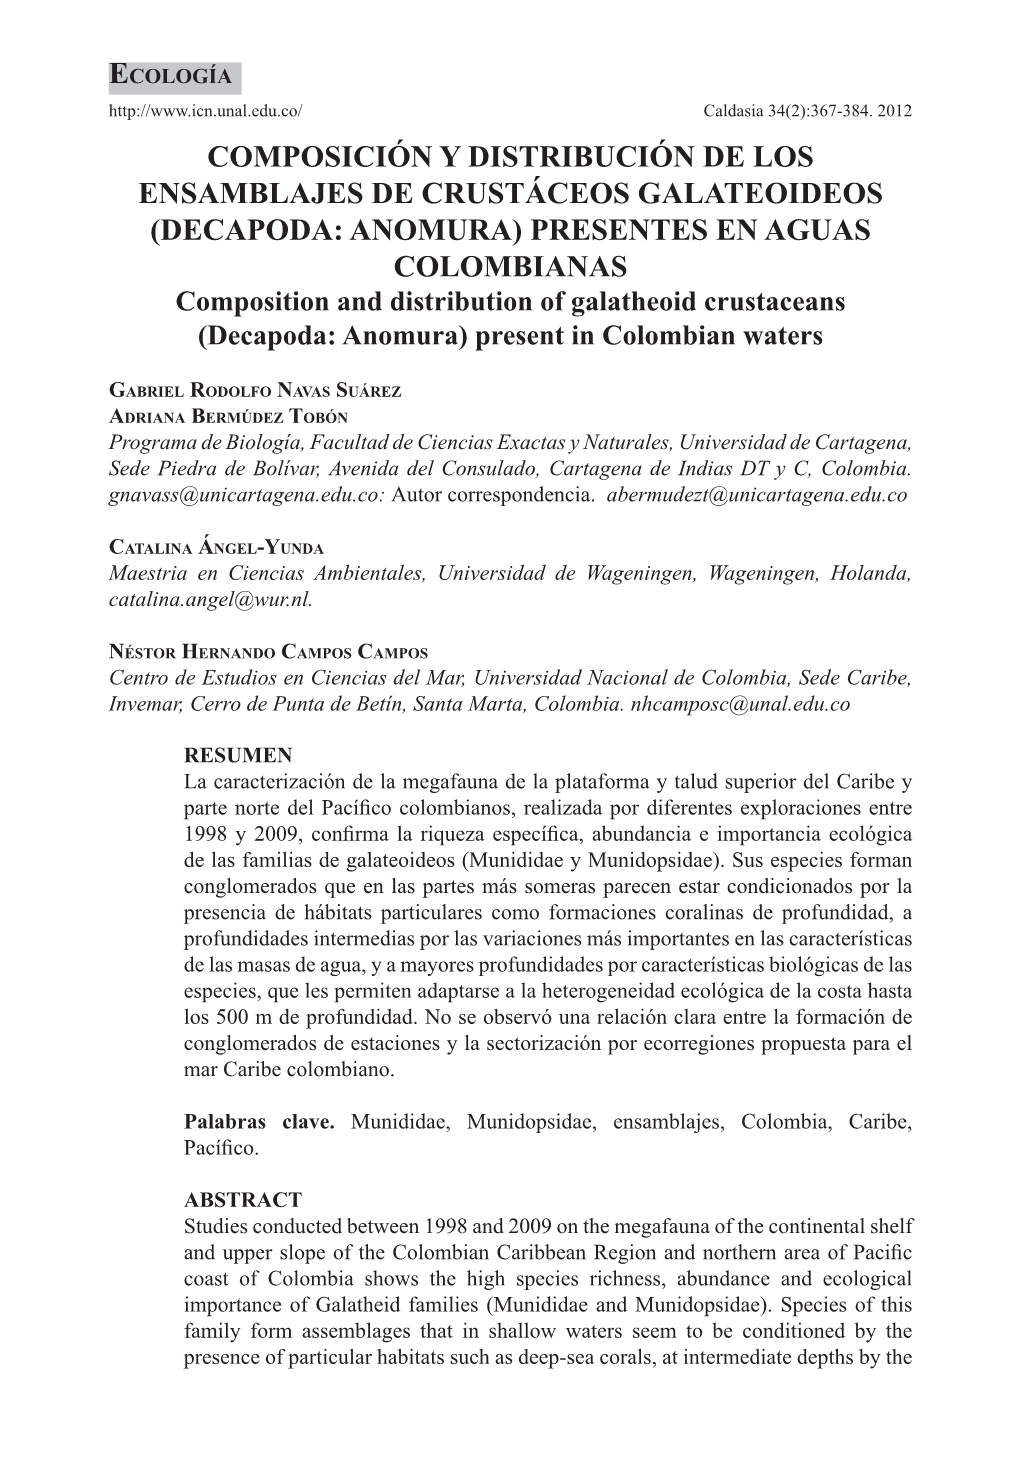 DECAPODA: ANOMURA) PRESENTES EN AGUAS COLOMBIANAS Composition and Distribution of Galatheoid Crustaceans (Decapoda: Anomura) Present in Colombian Waters